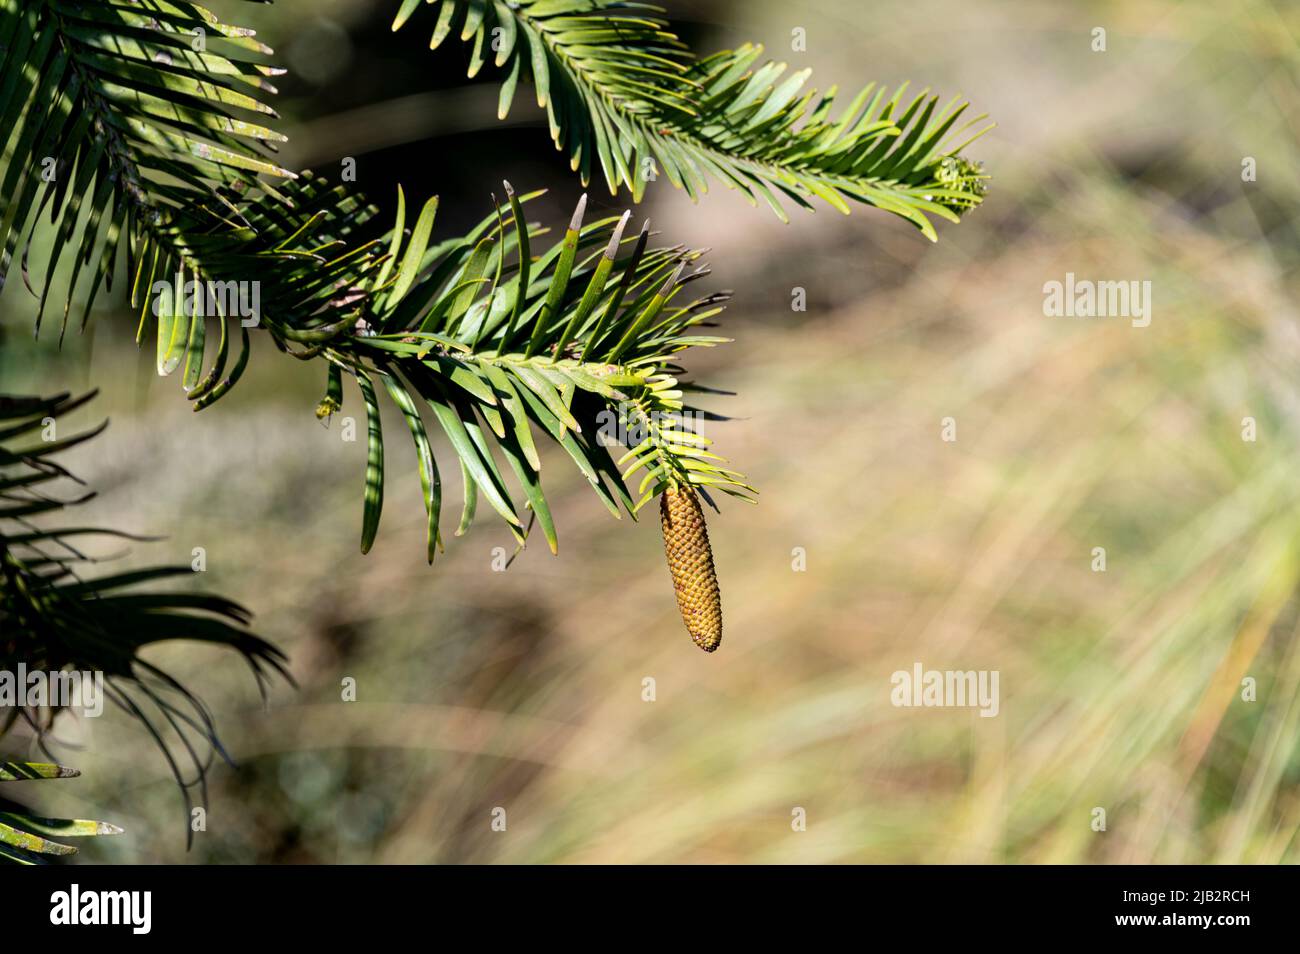 Wollemia,nobilis, Wollemi pine, Araucariaceae. Prehistoric pine discovered in Australia. Stock Photo